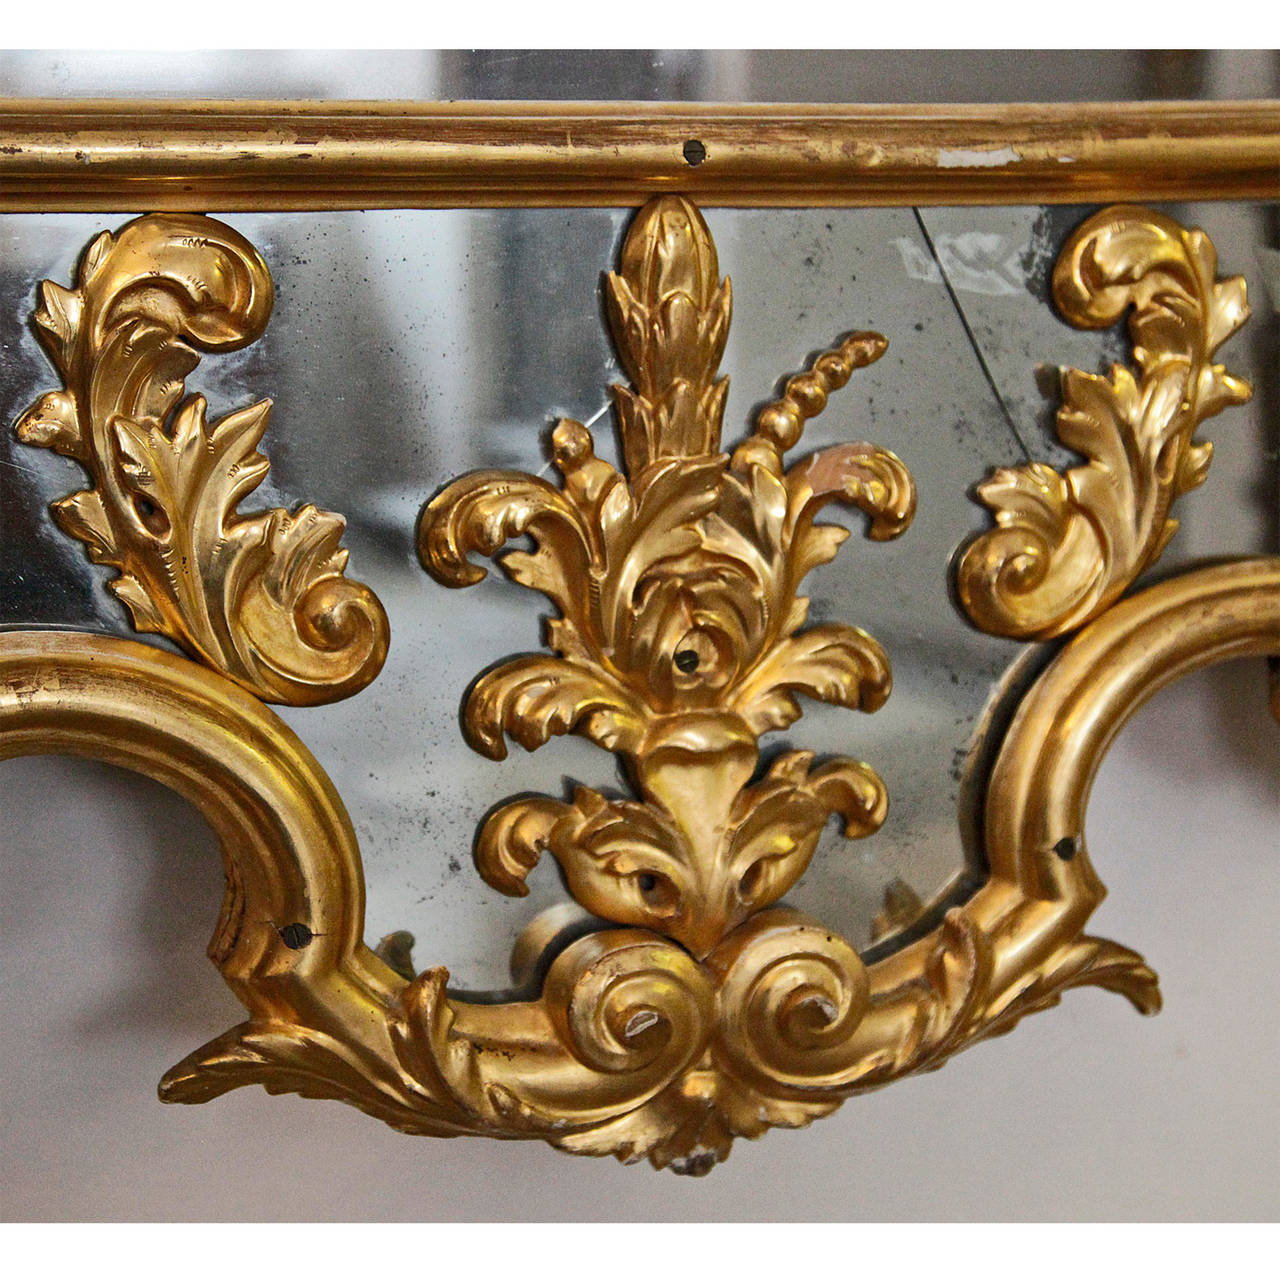 Italian Magnificent Florence Palace Mirror, circa 1750 - 1770